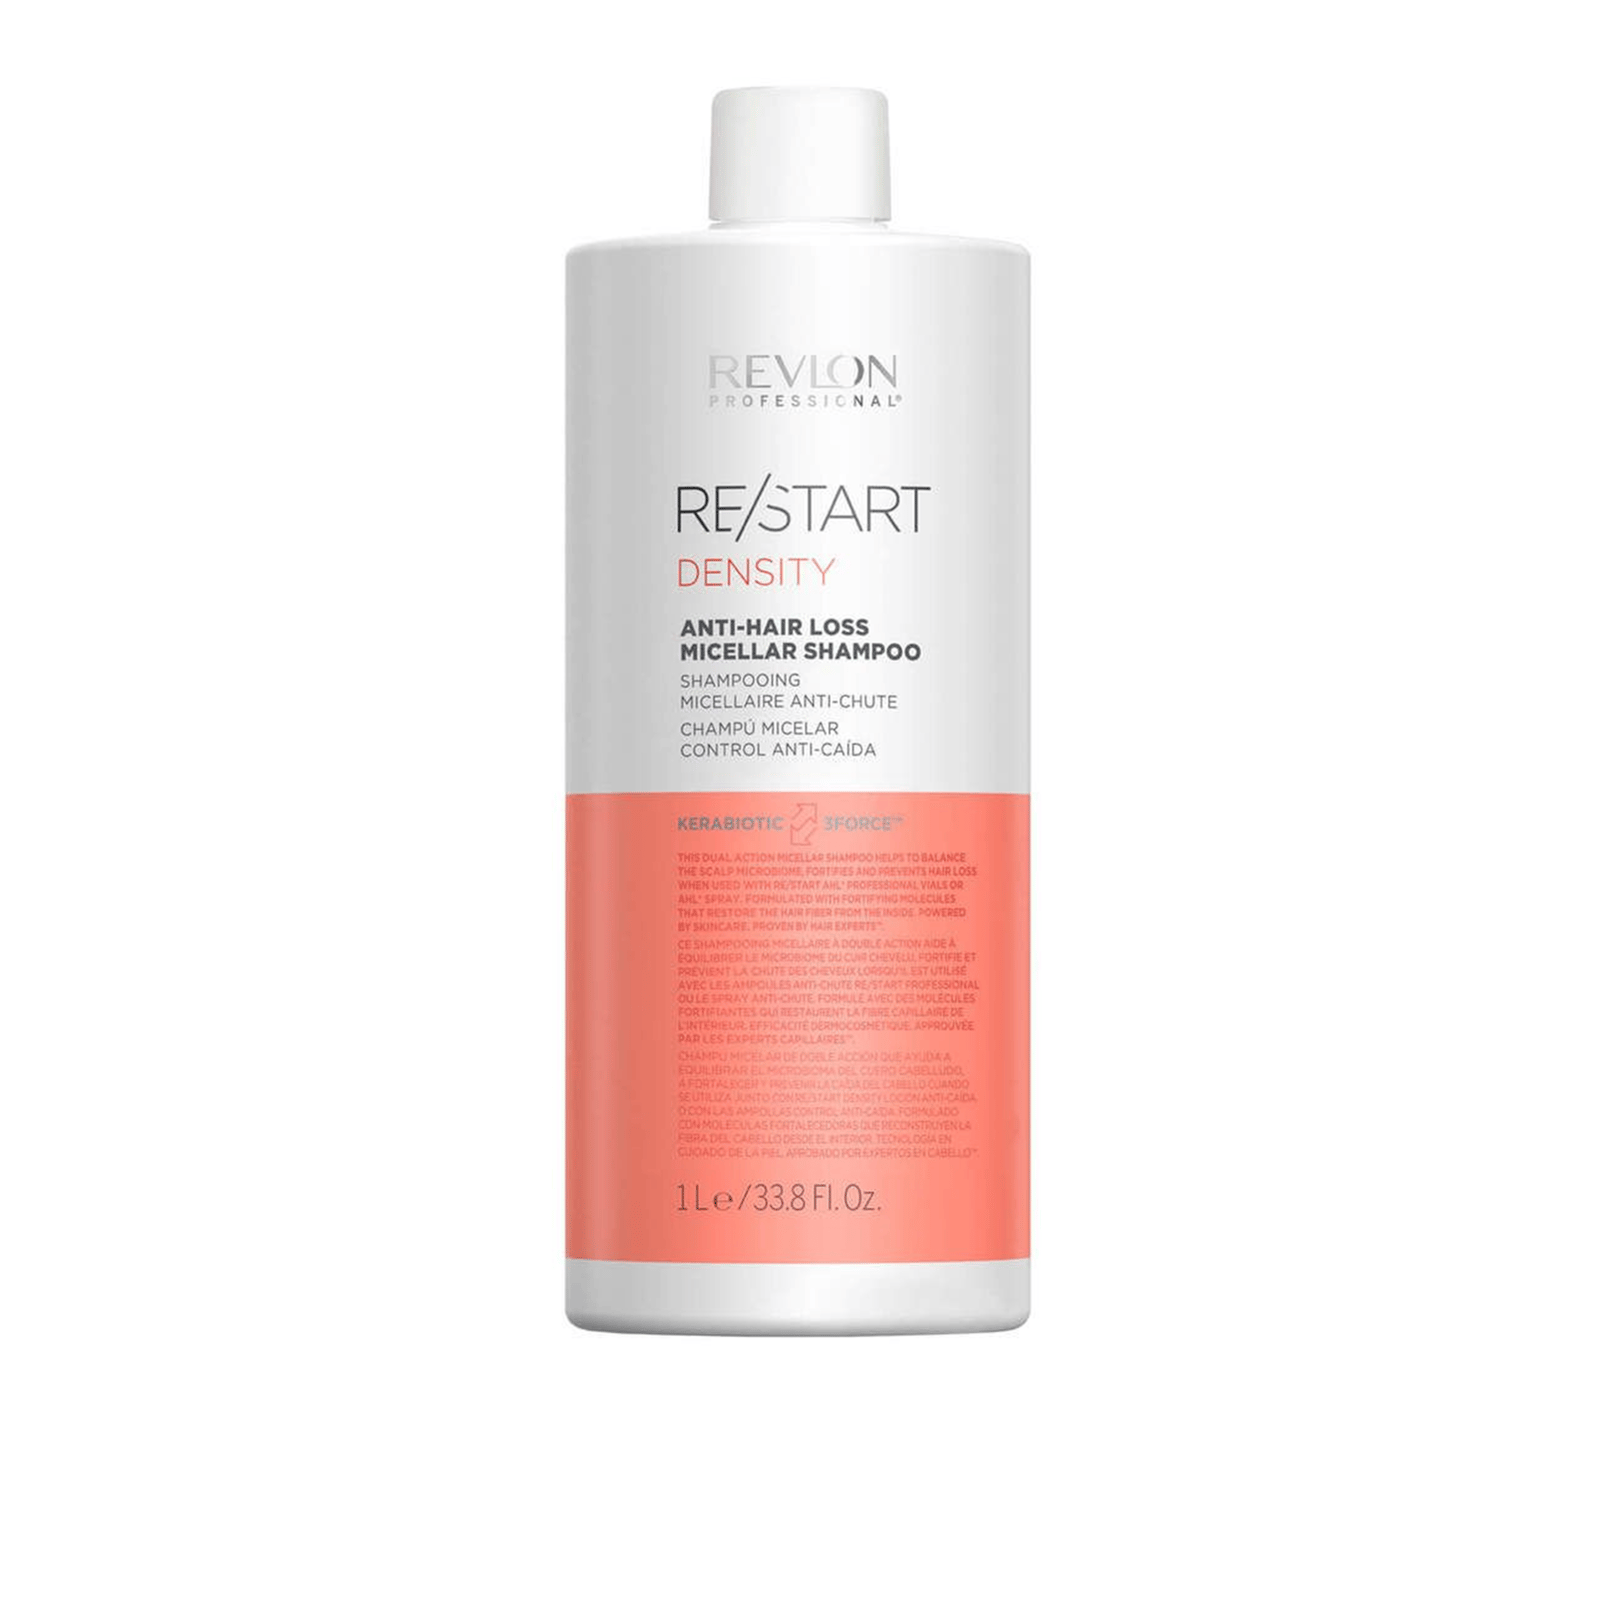 Buy Revlon Professional USA · Micellar Re/Start Shampoo Loss Anti-Hair Density